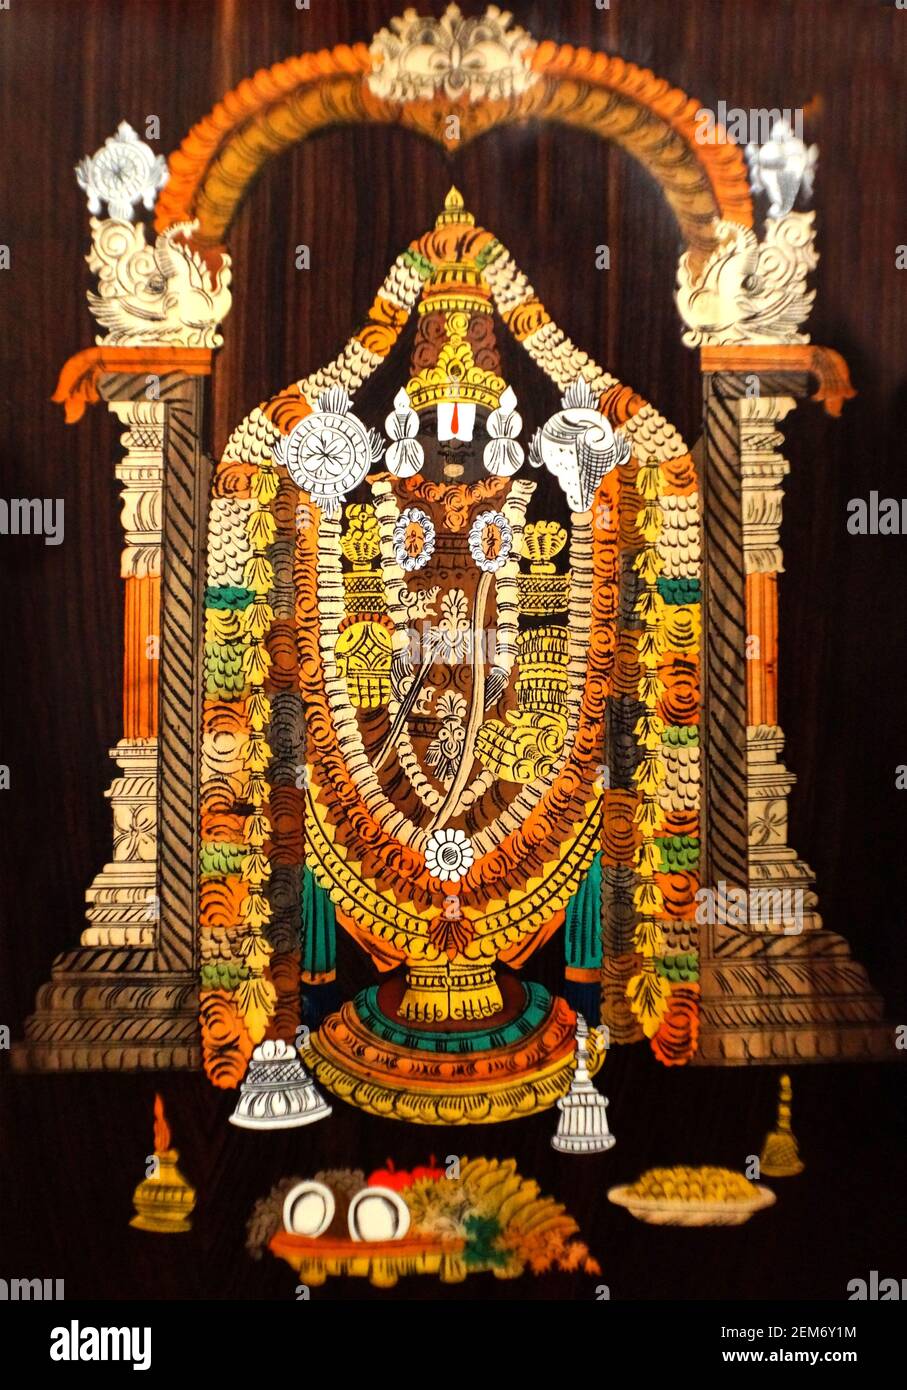 Sri venkateswara swamy temple hi-res stock photography and images - Alamy